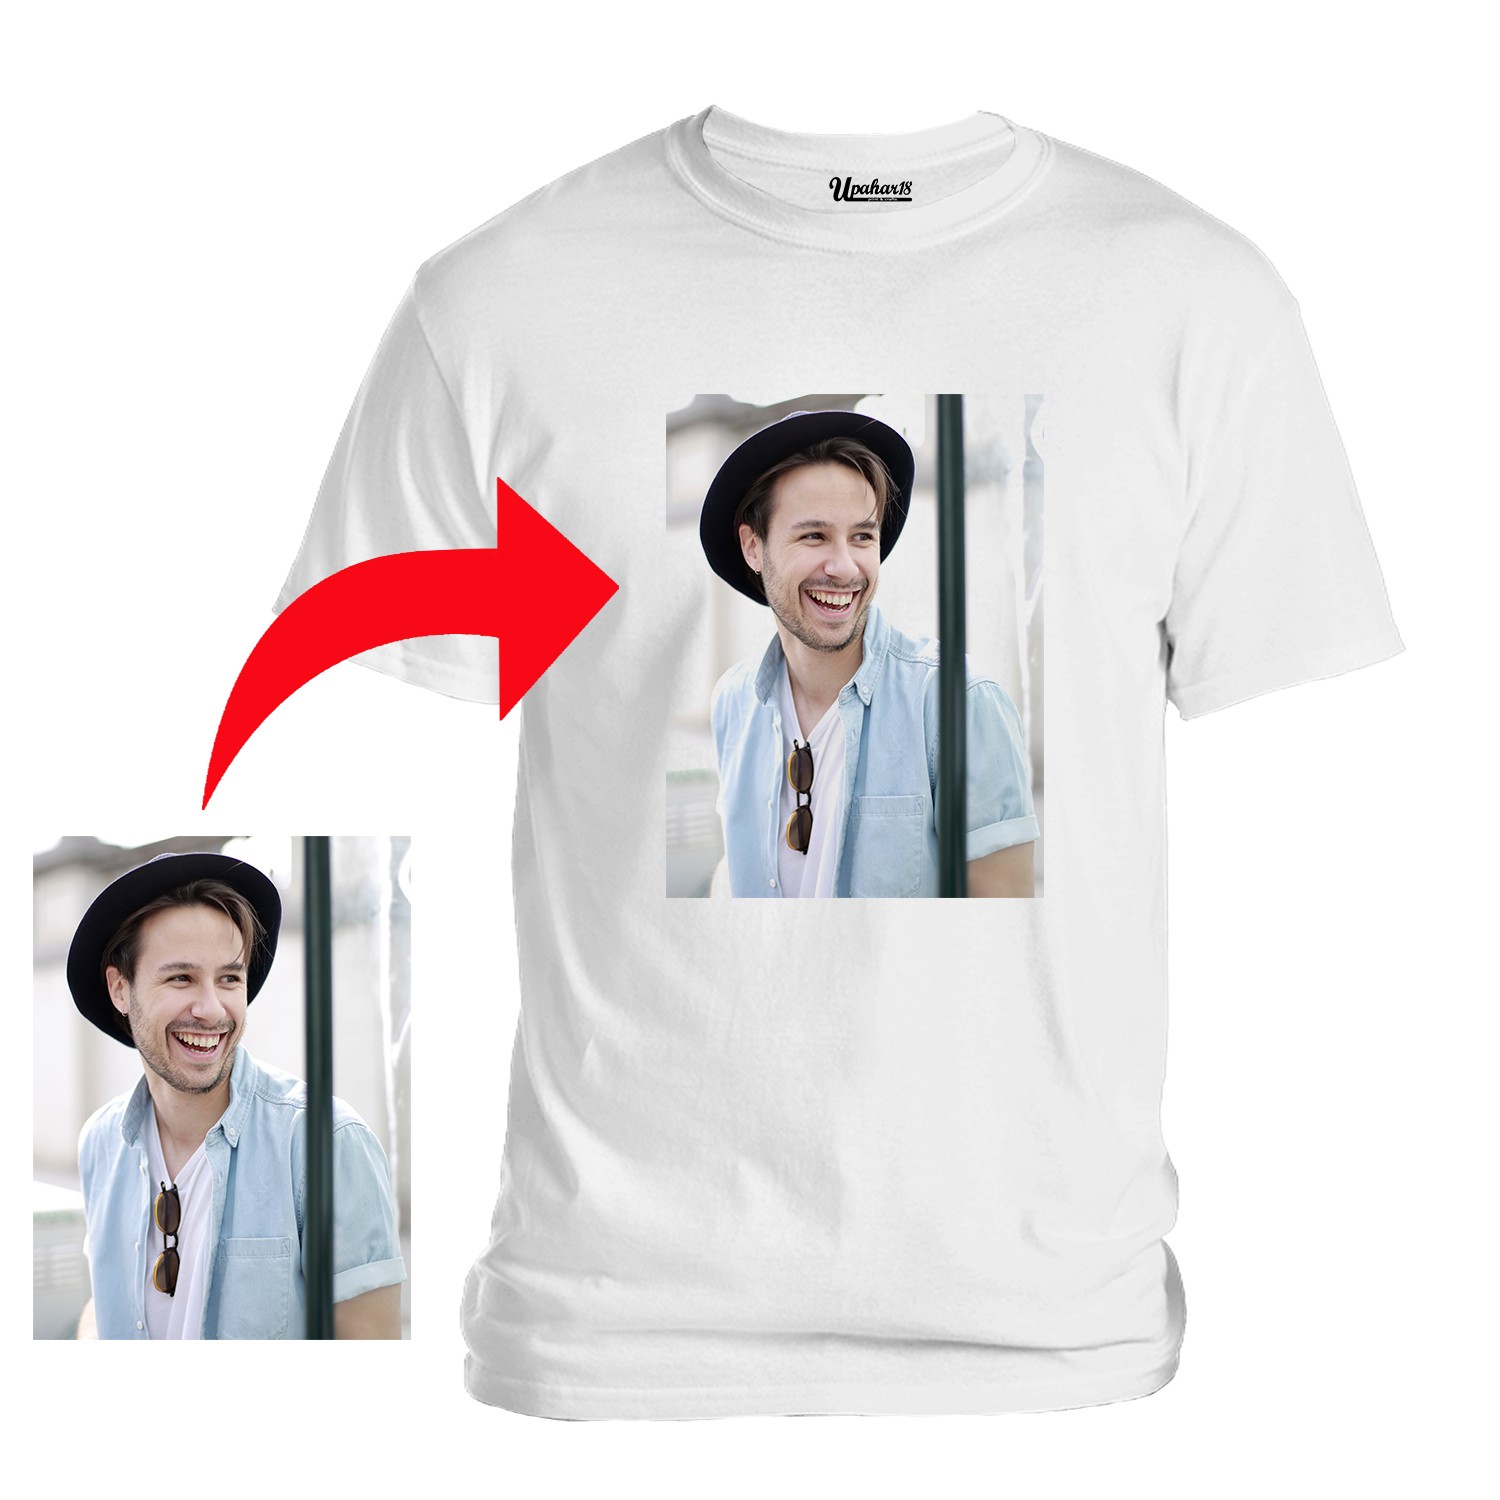 Personalized Photo Printed Premium Cotton Half Sleeve White Tshirt